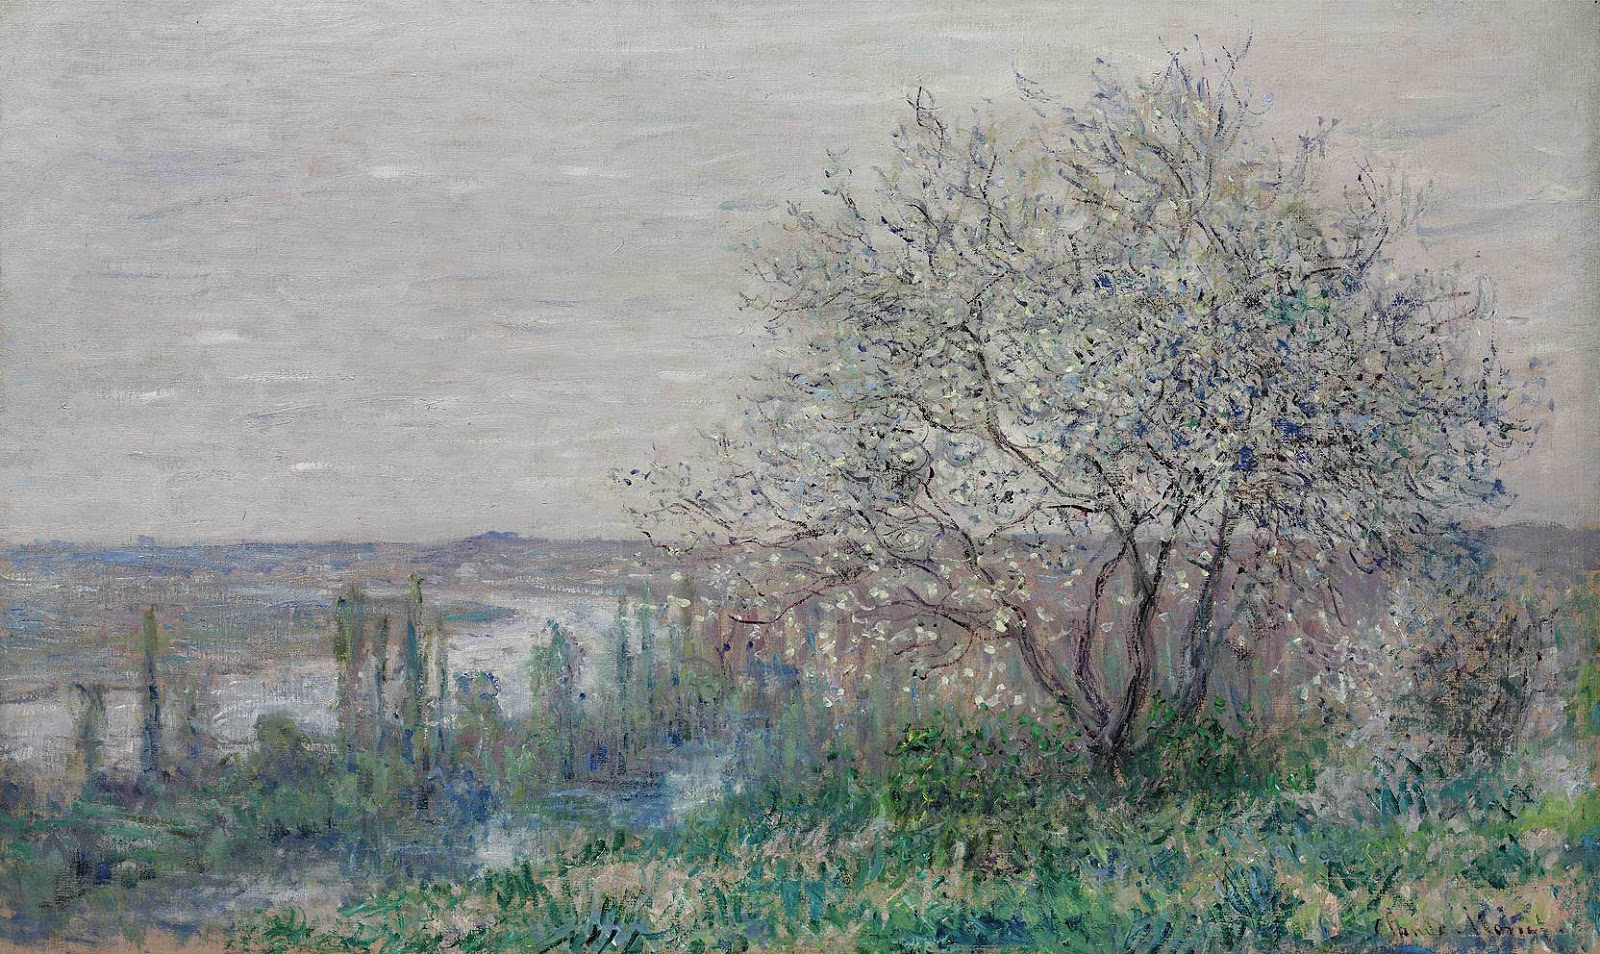 Claude+Monet-1840-1926 (945).jpg